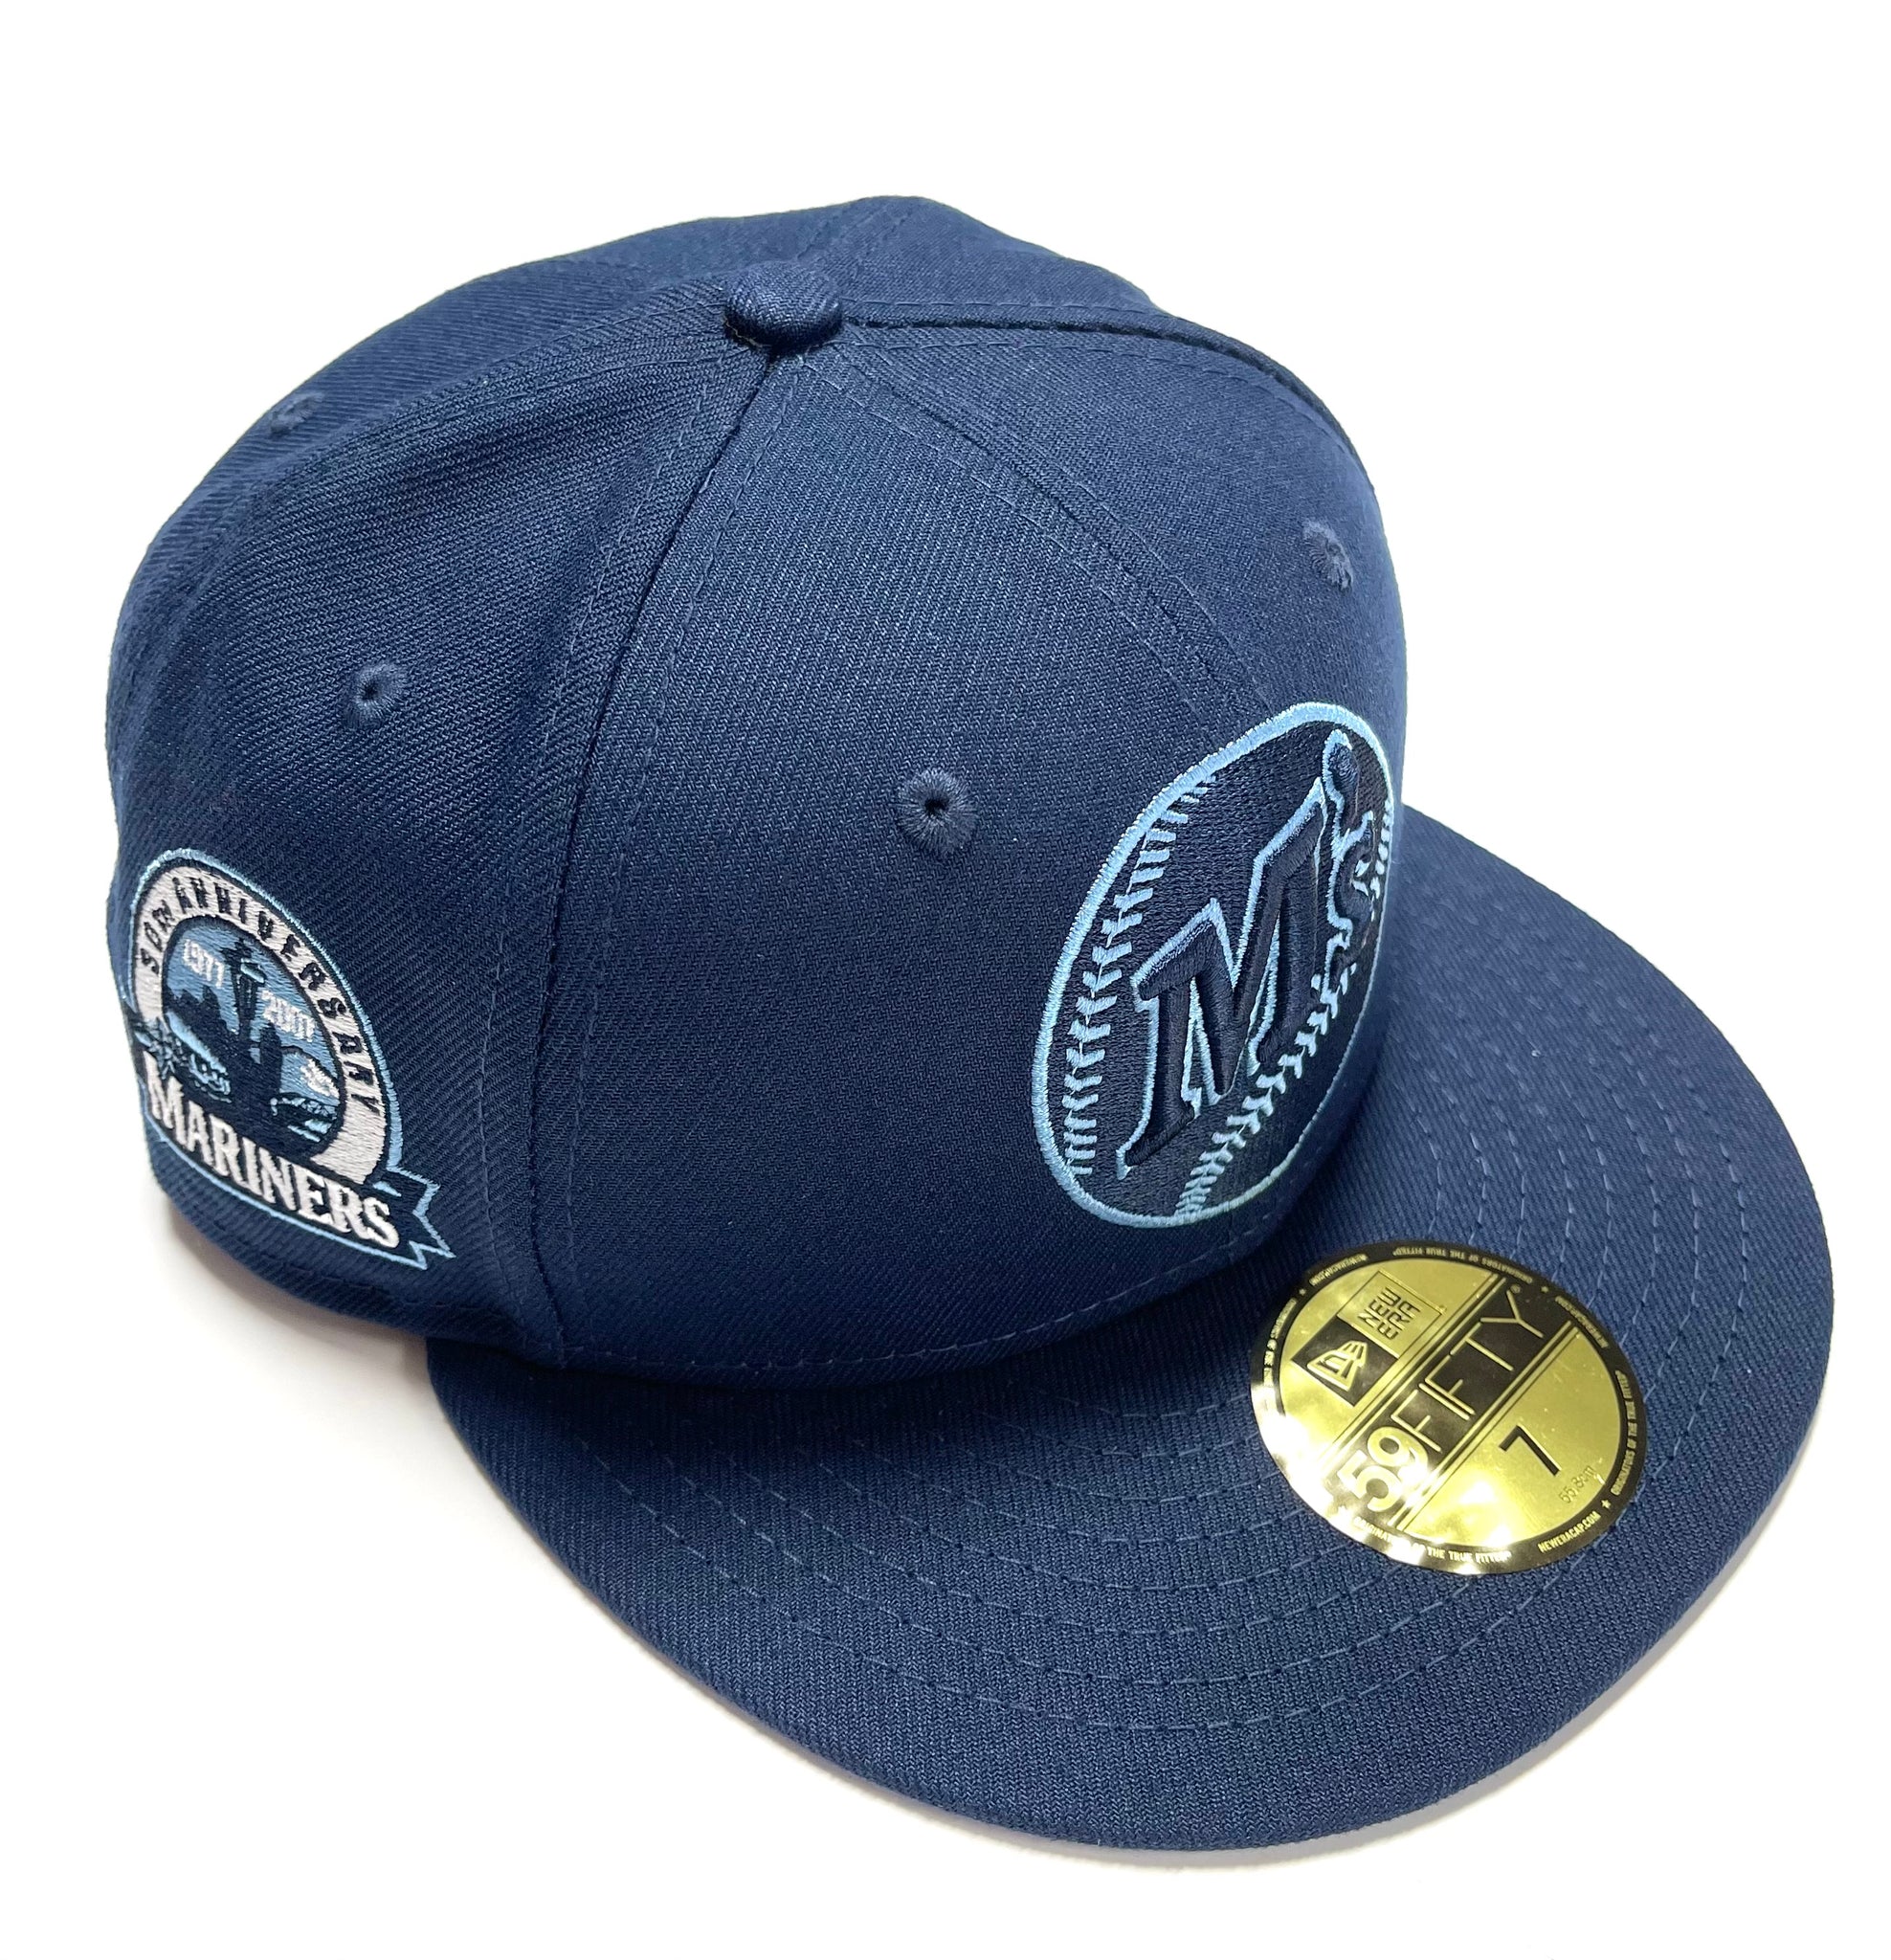 Seattle Mariners MLB New Era 9FIFTY Hat